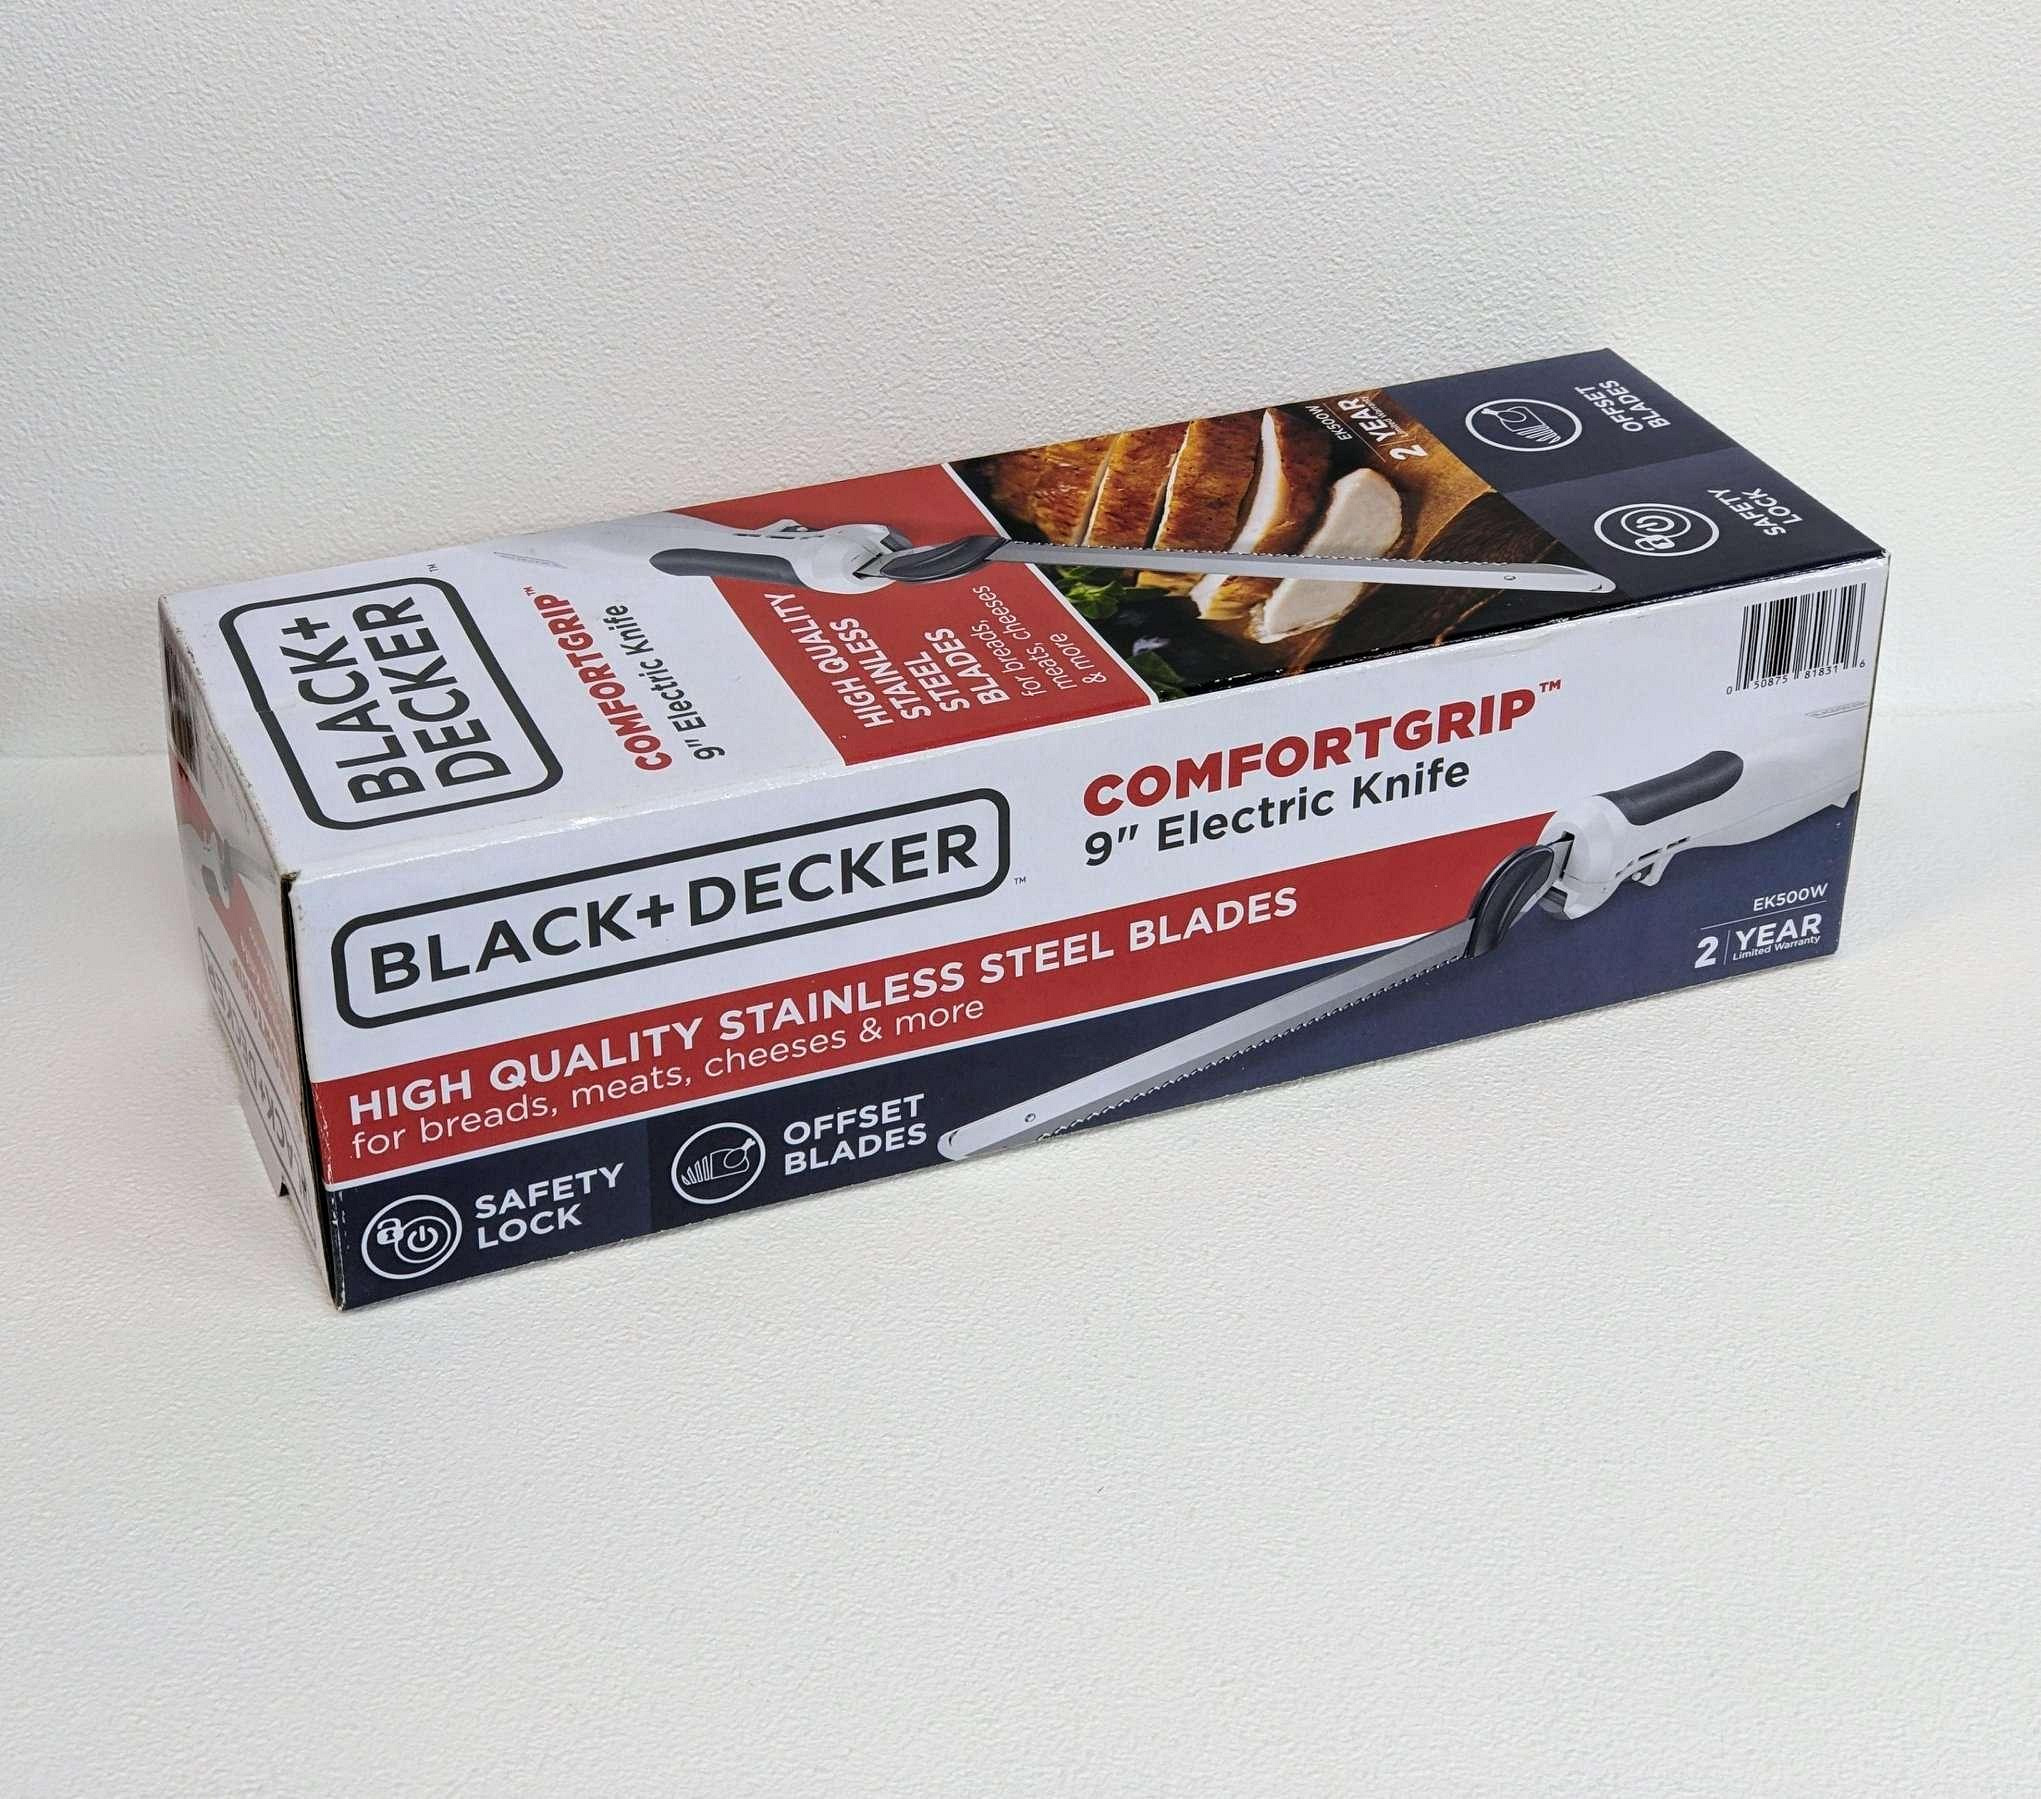 Black+decker Electric Knife, EK500W